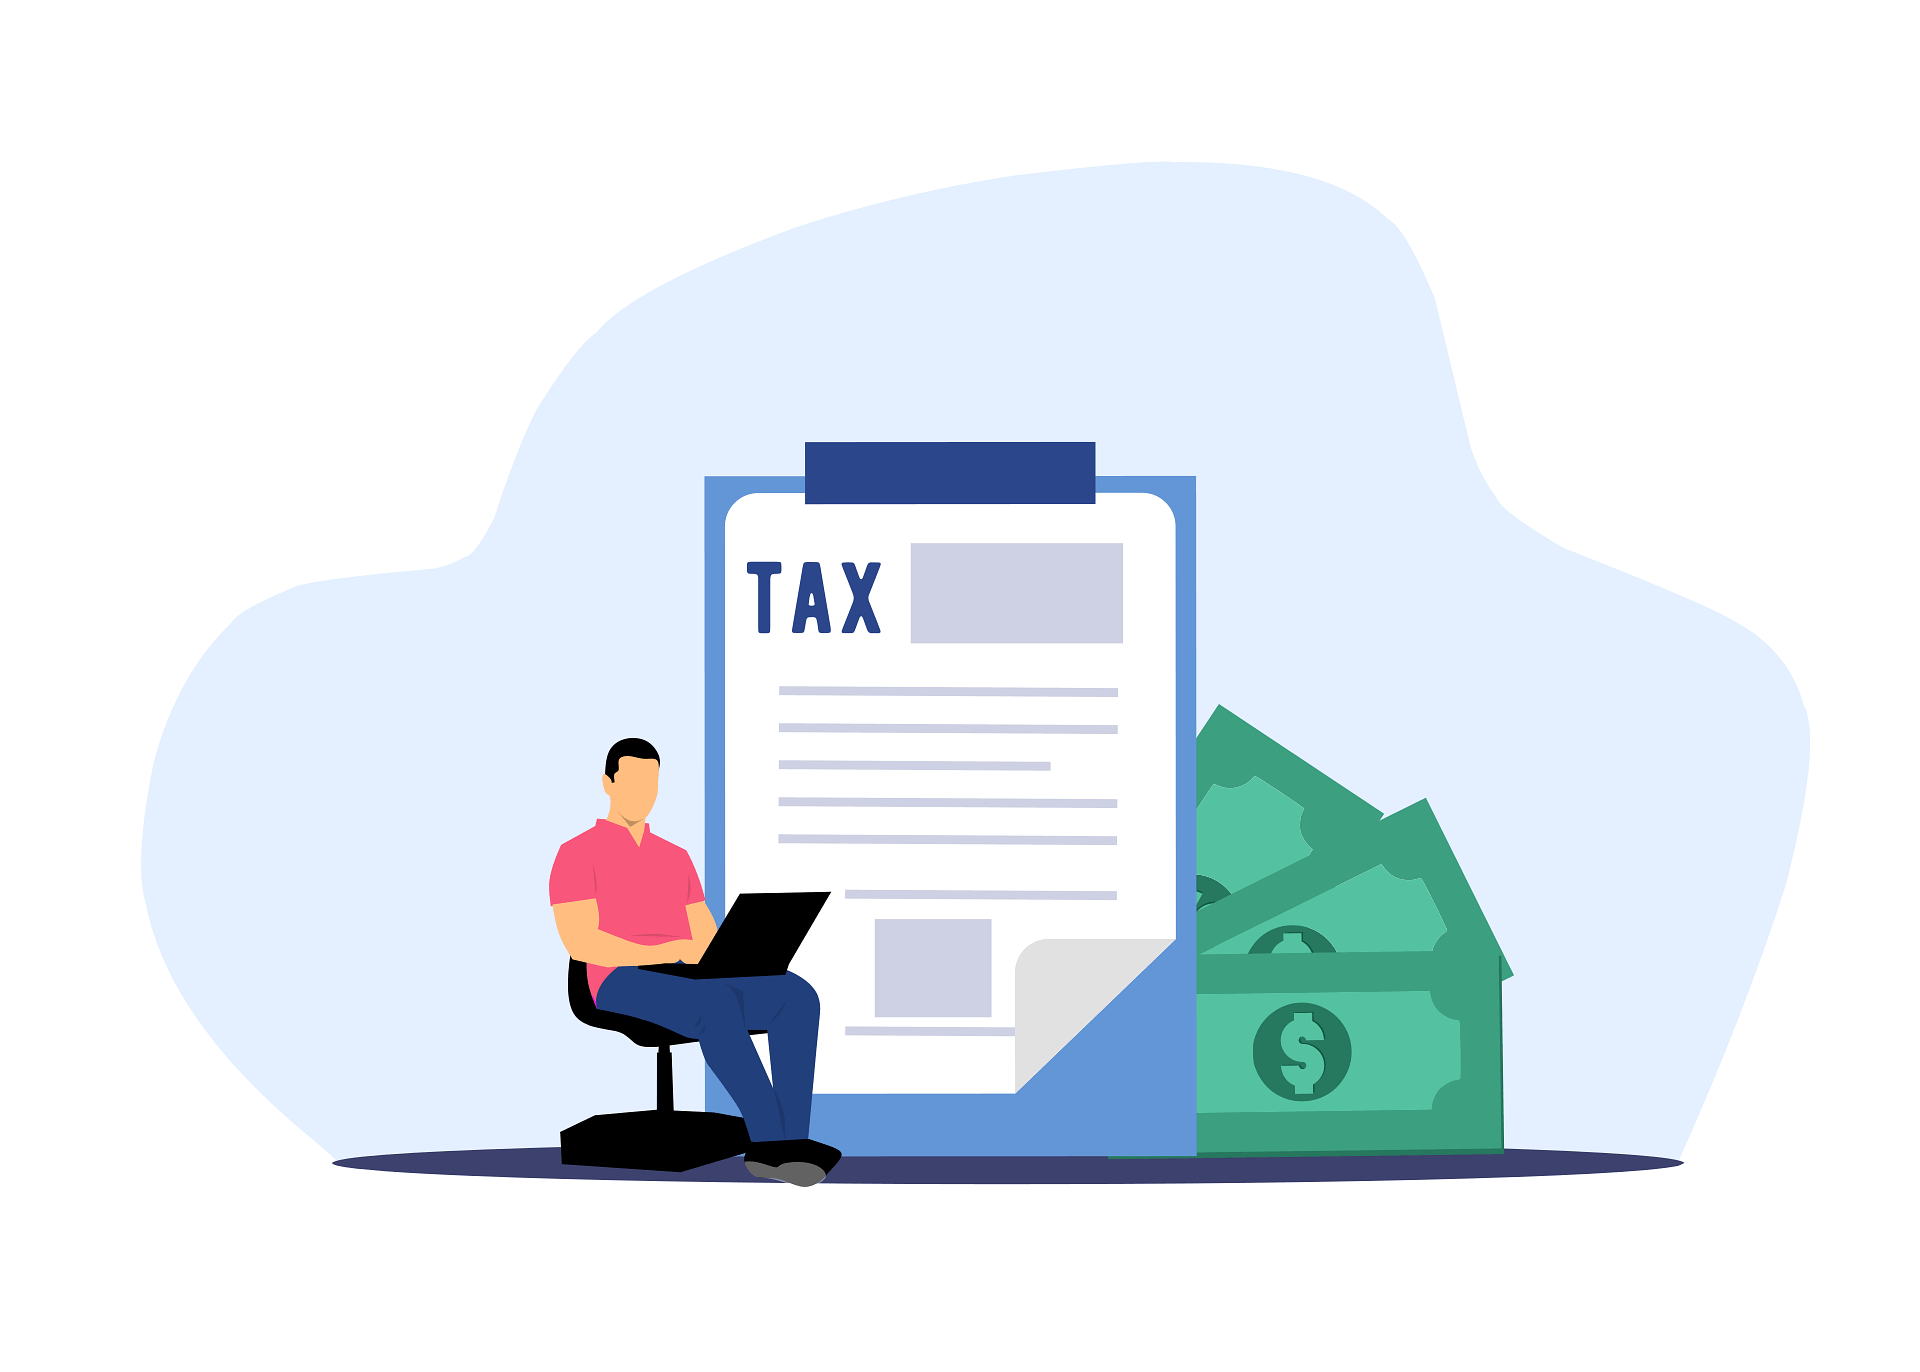 Tax Image